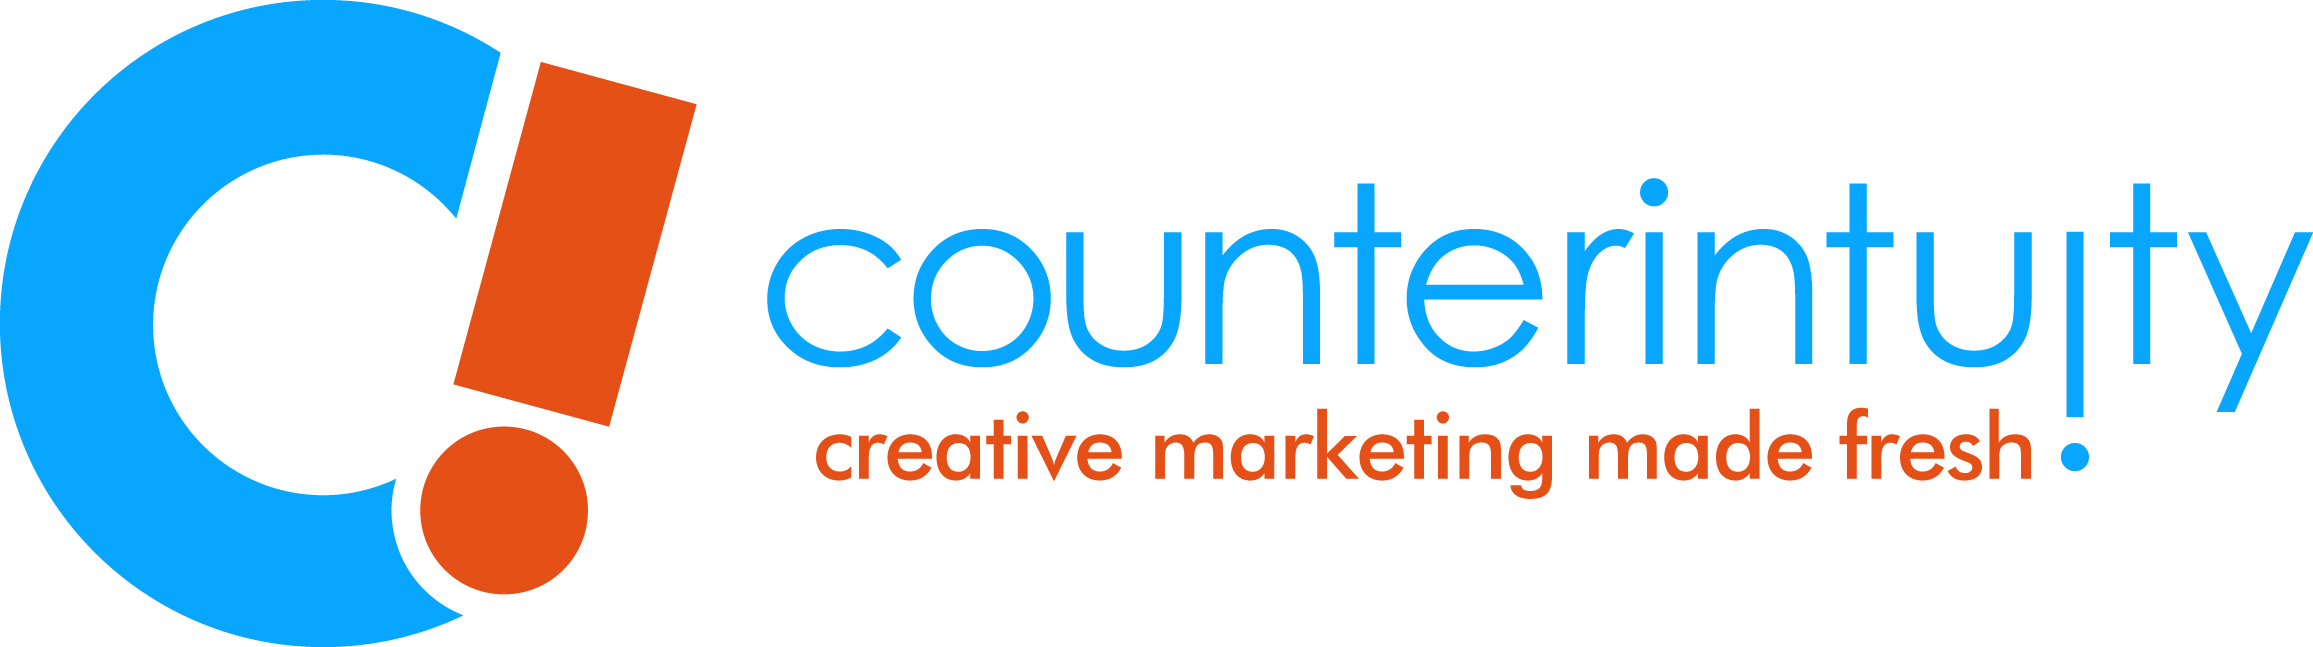 Counterintuity logo